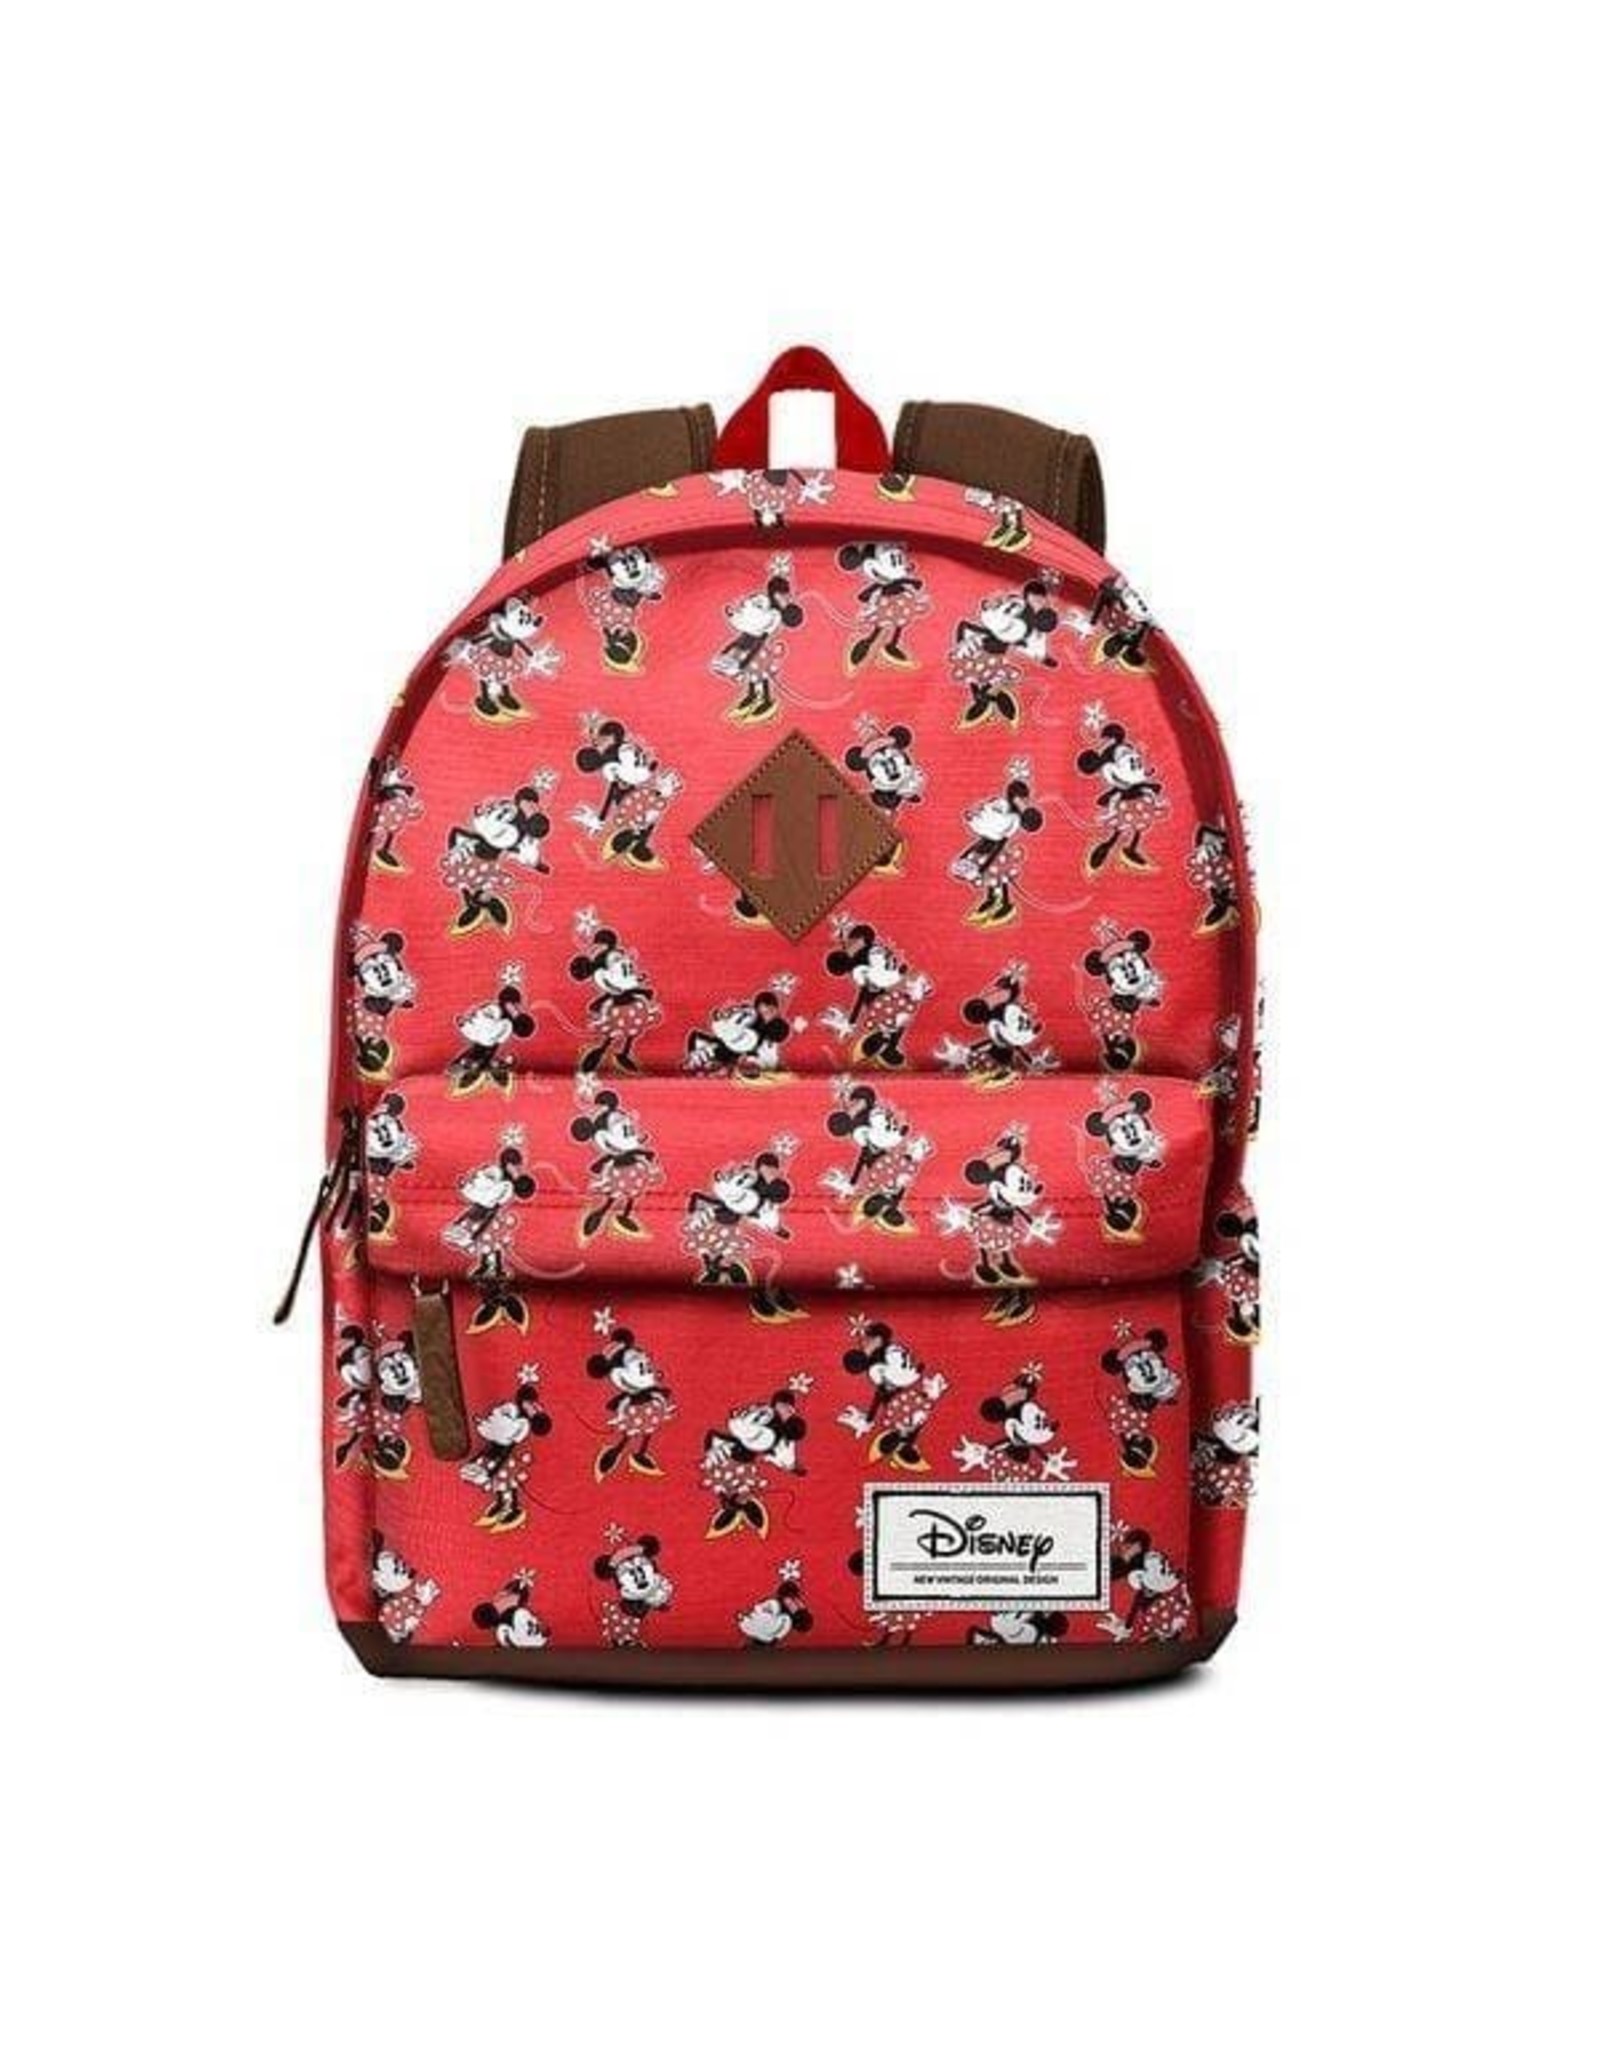 Disney Disney bags - Disney backpack Minnie Mouse vintage red